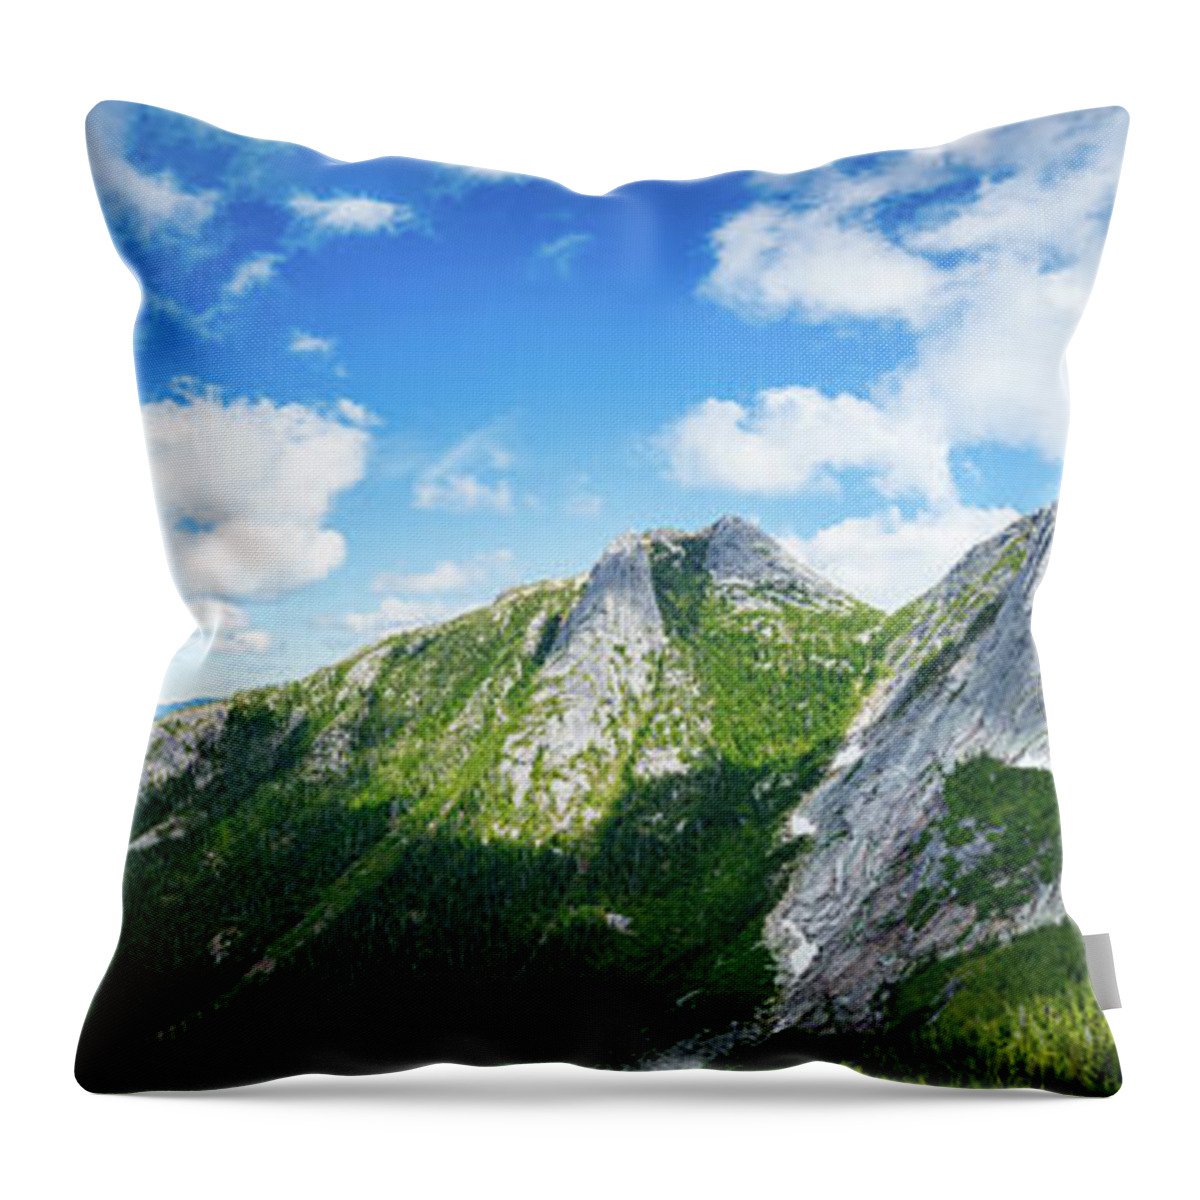 Canada Throw Pillow featuring the photograph Mountain Landscape by Rick Deacon